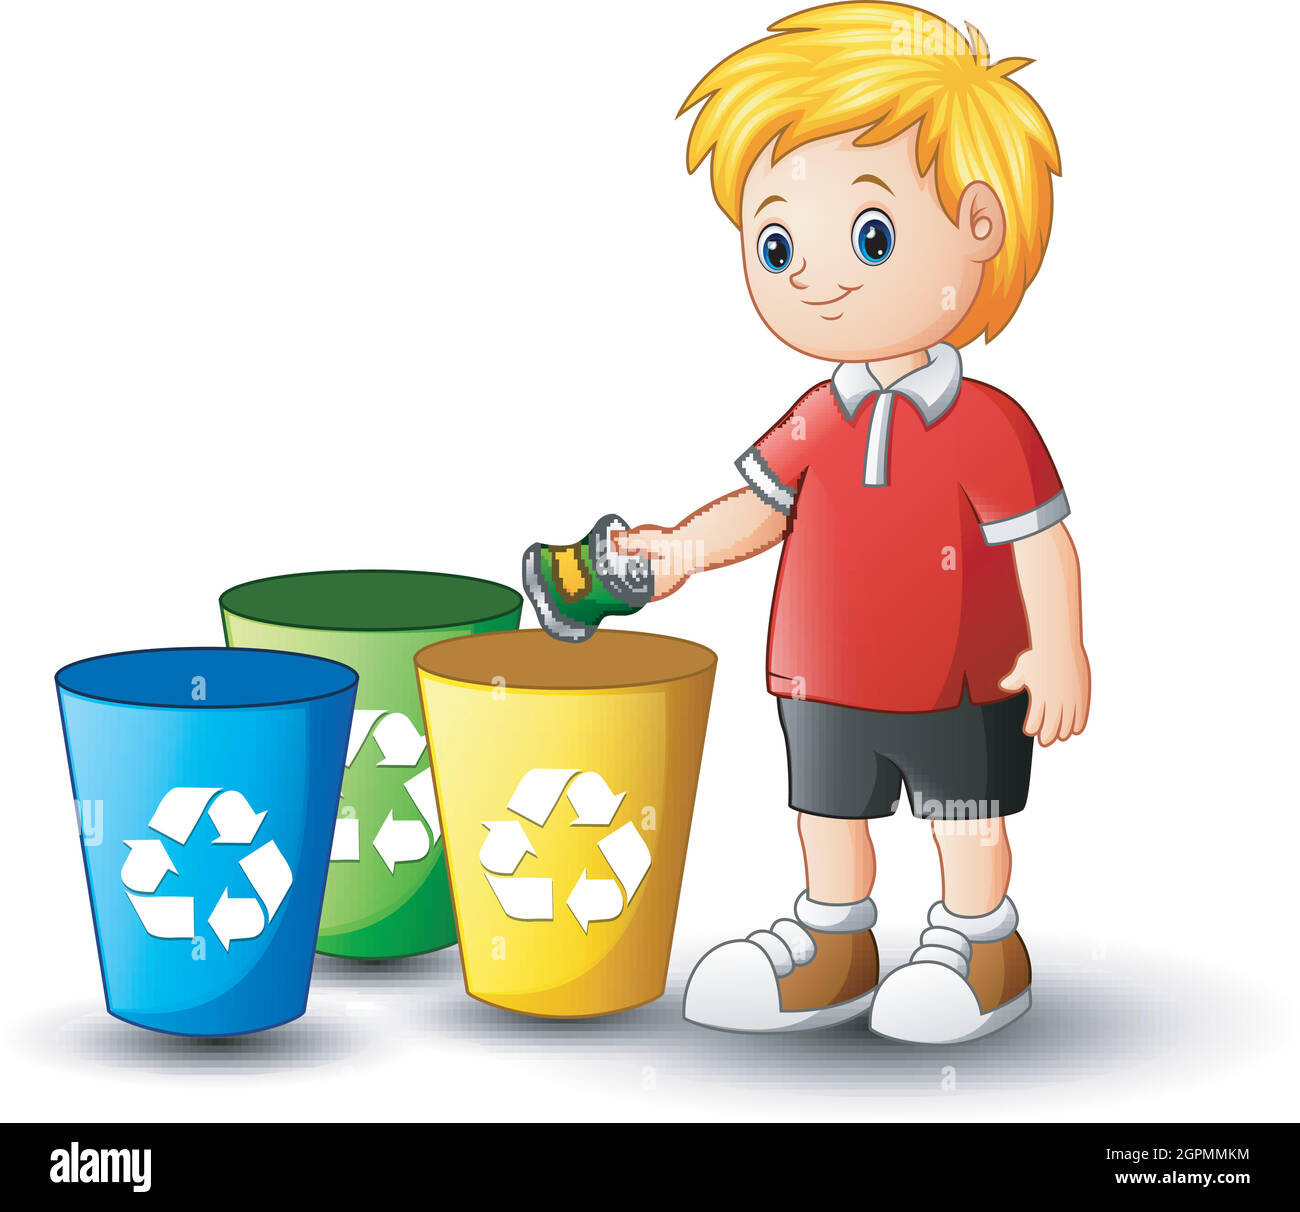 Boy putting aluminum in recycling bin Stock Vector